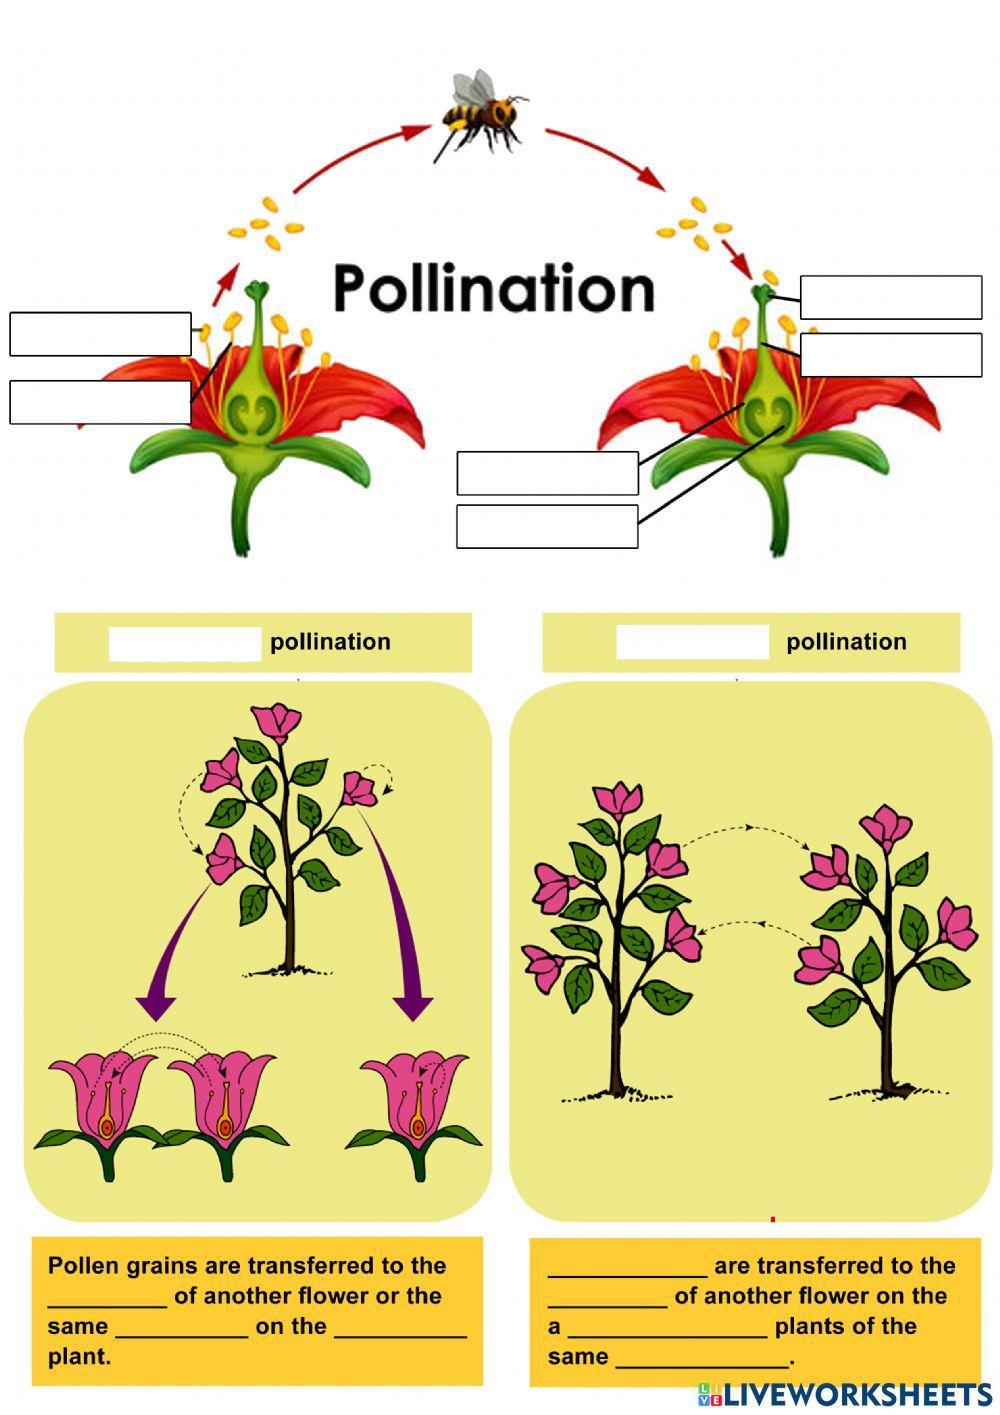 PBD 4.7: Pollination